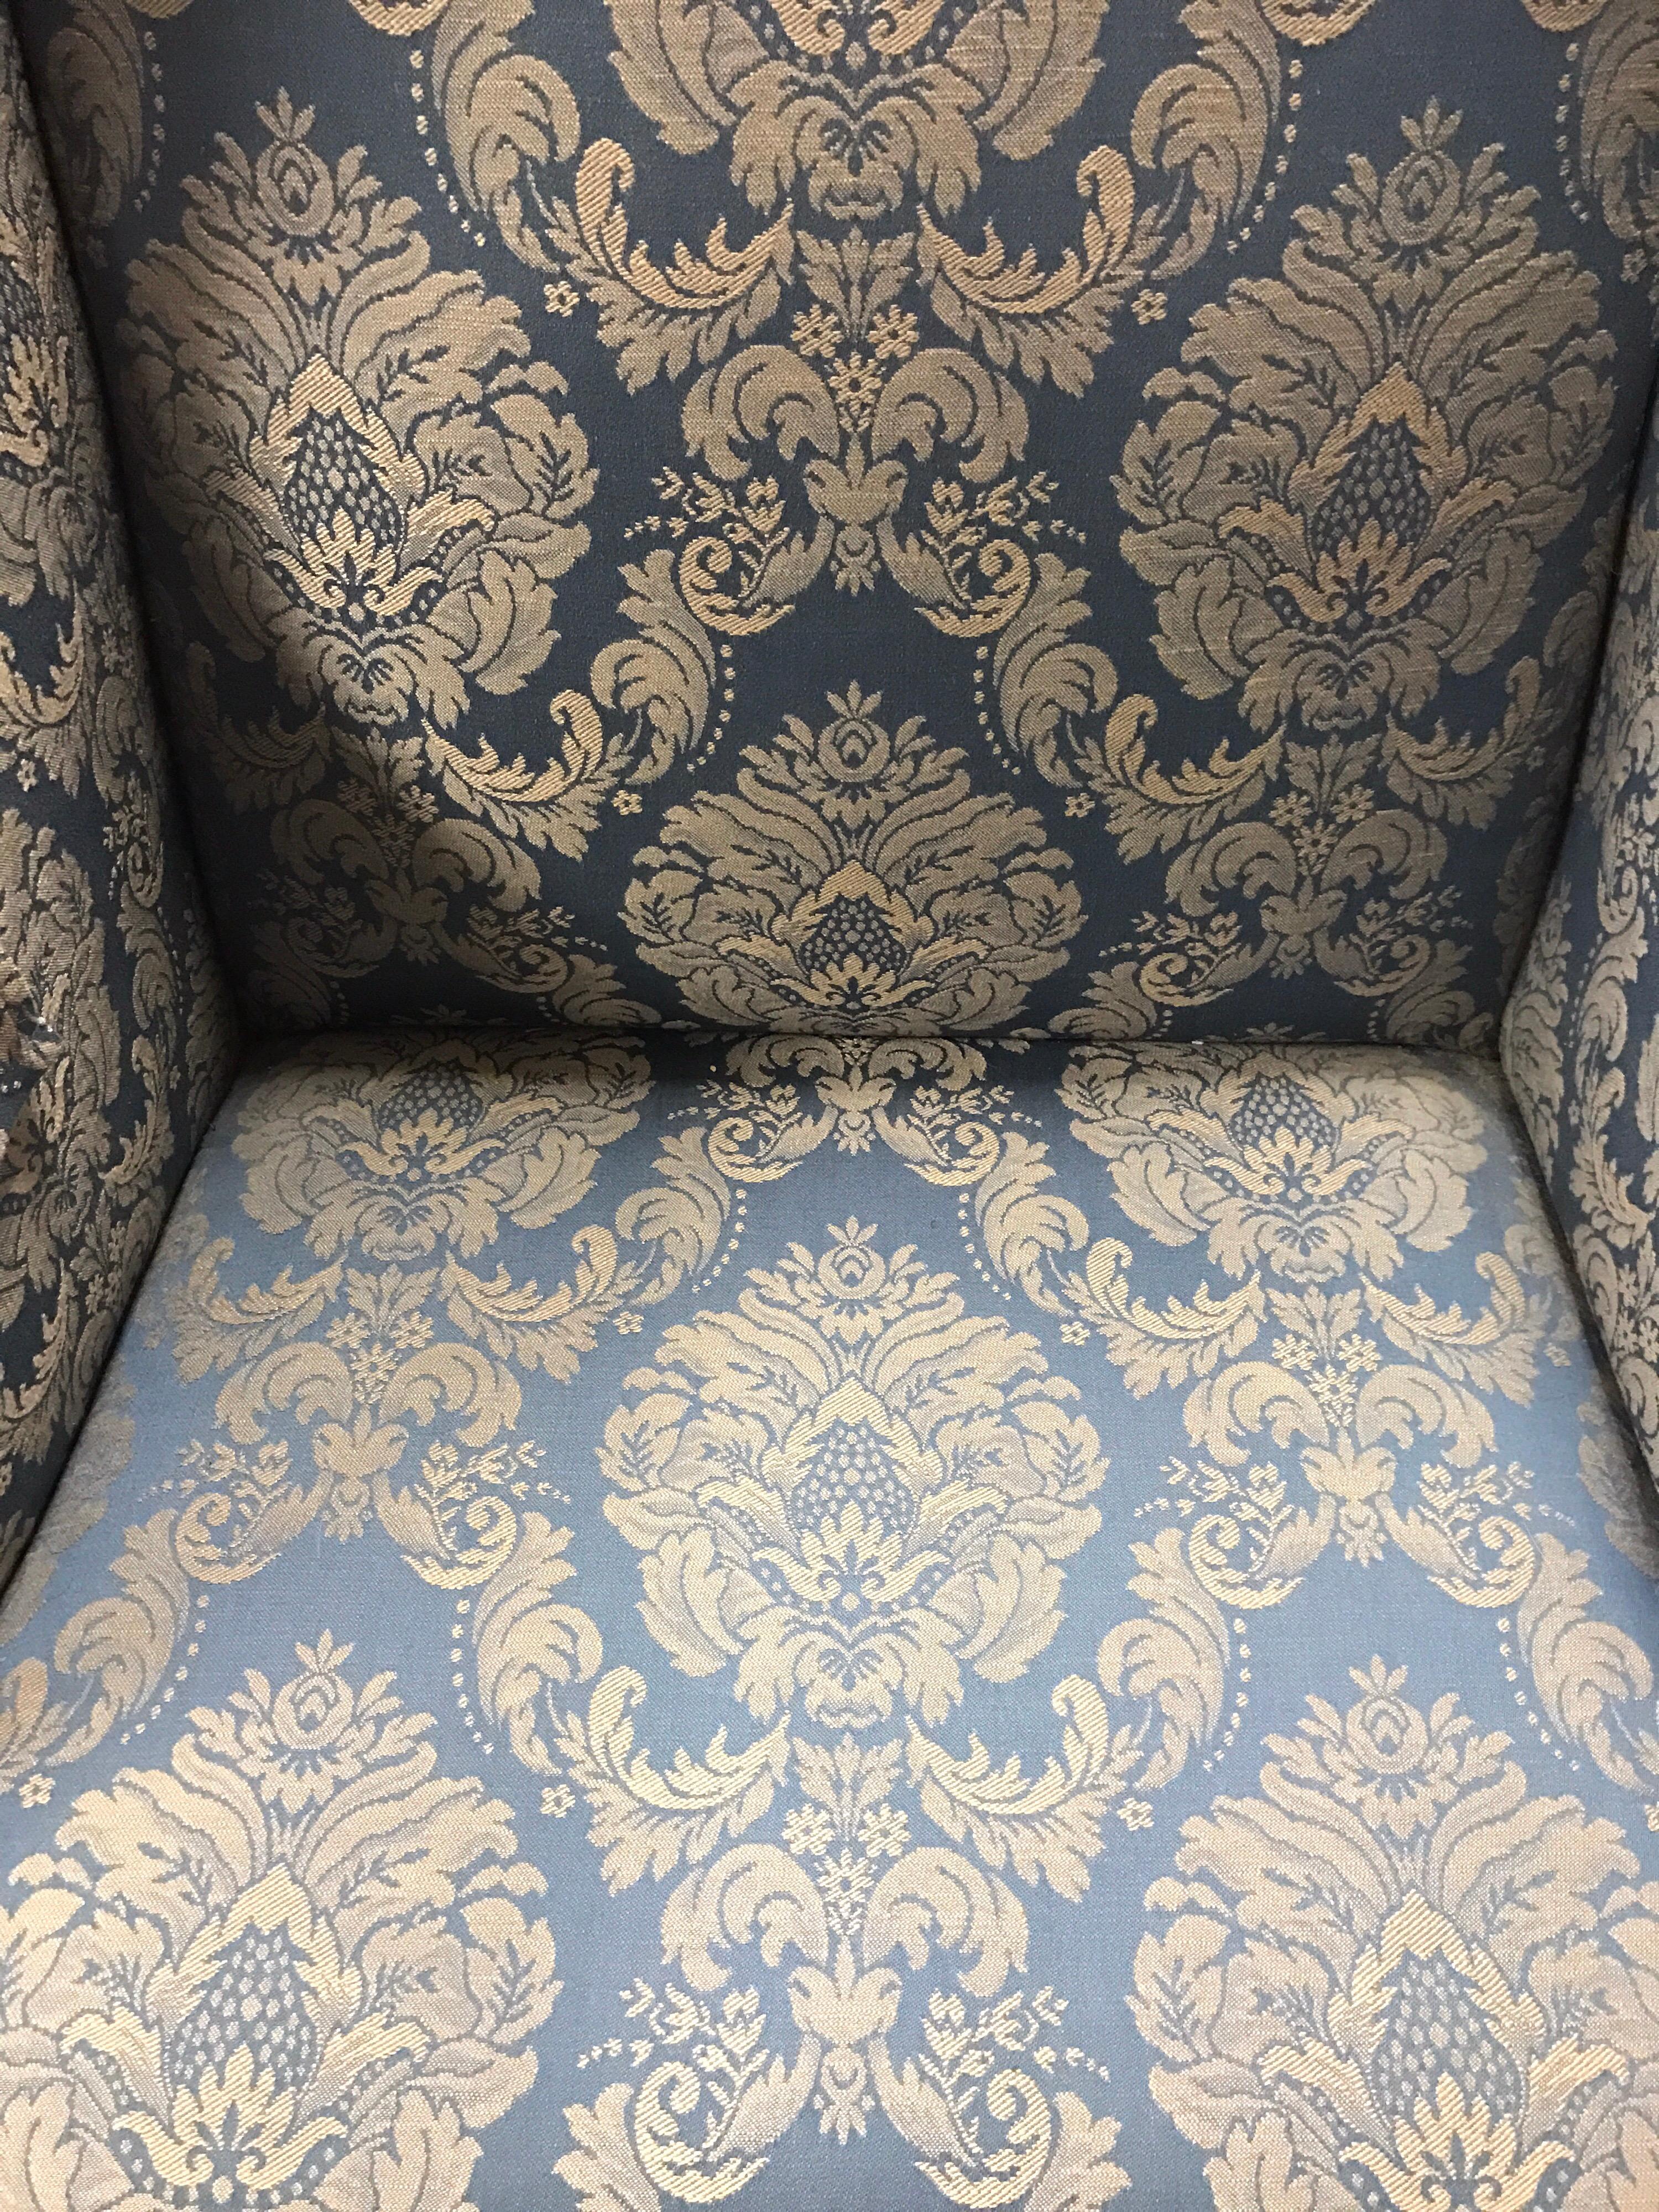 blue damask chair